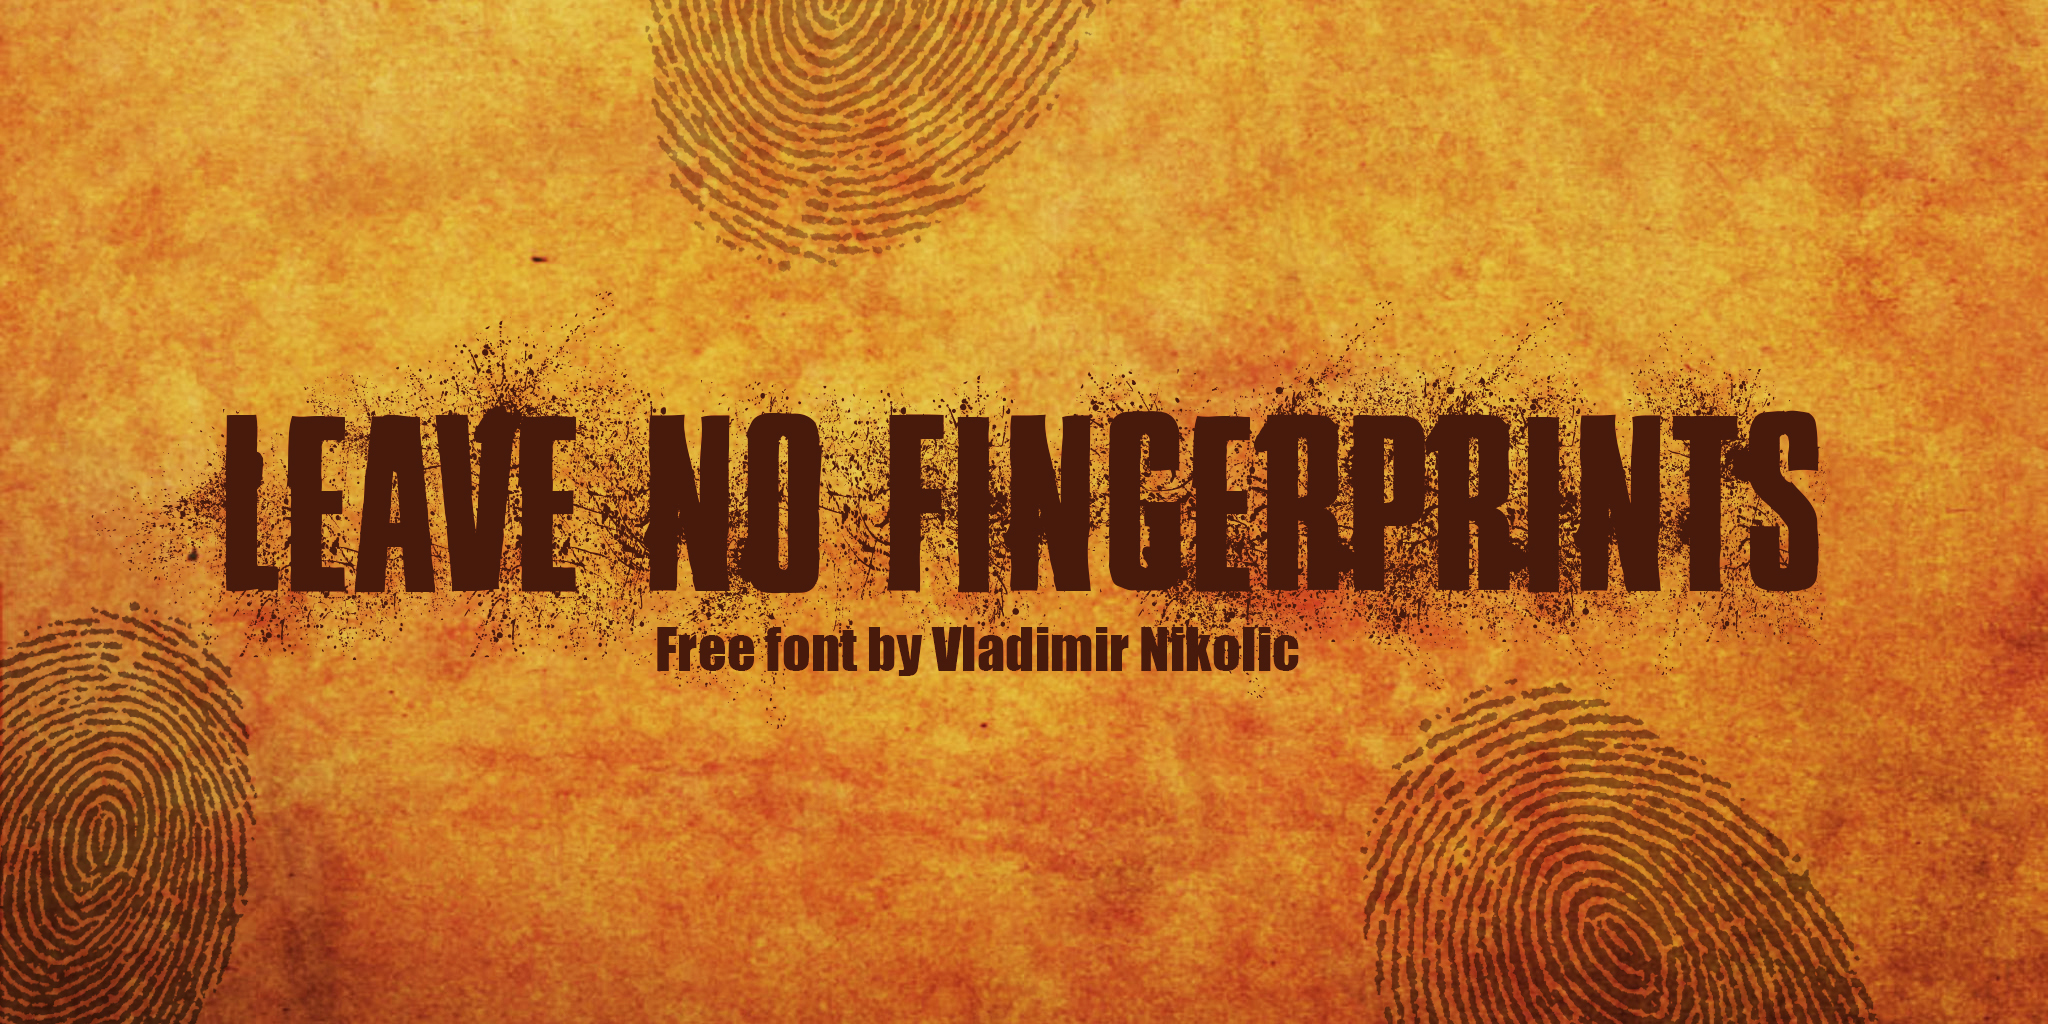 Leave No Fingerprints